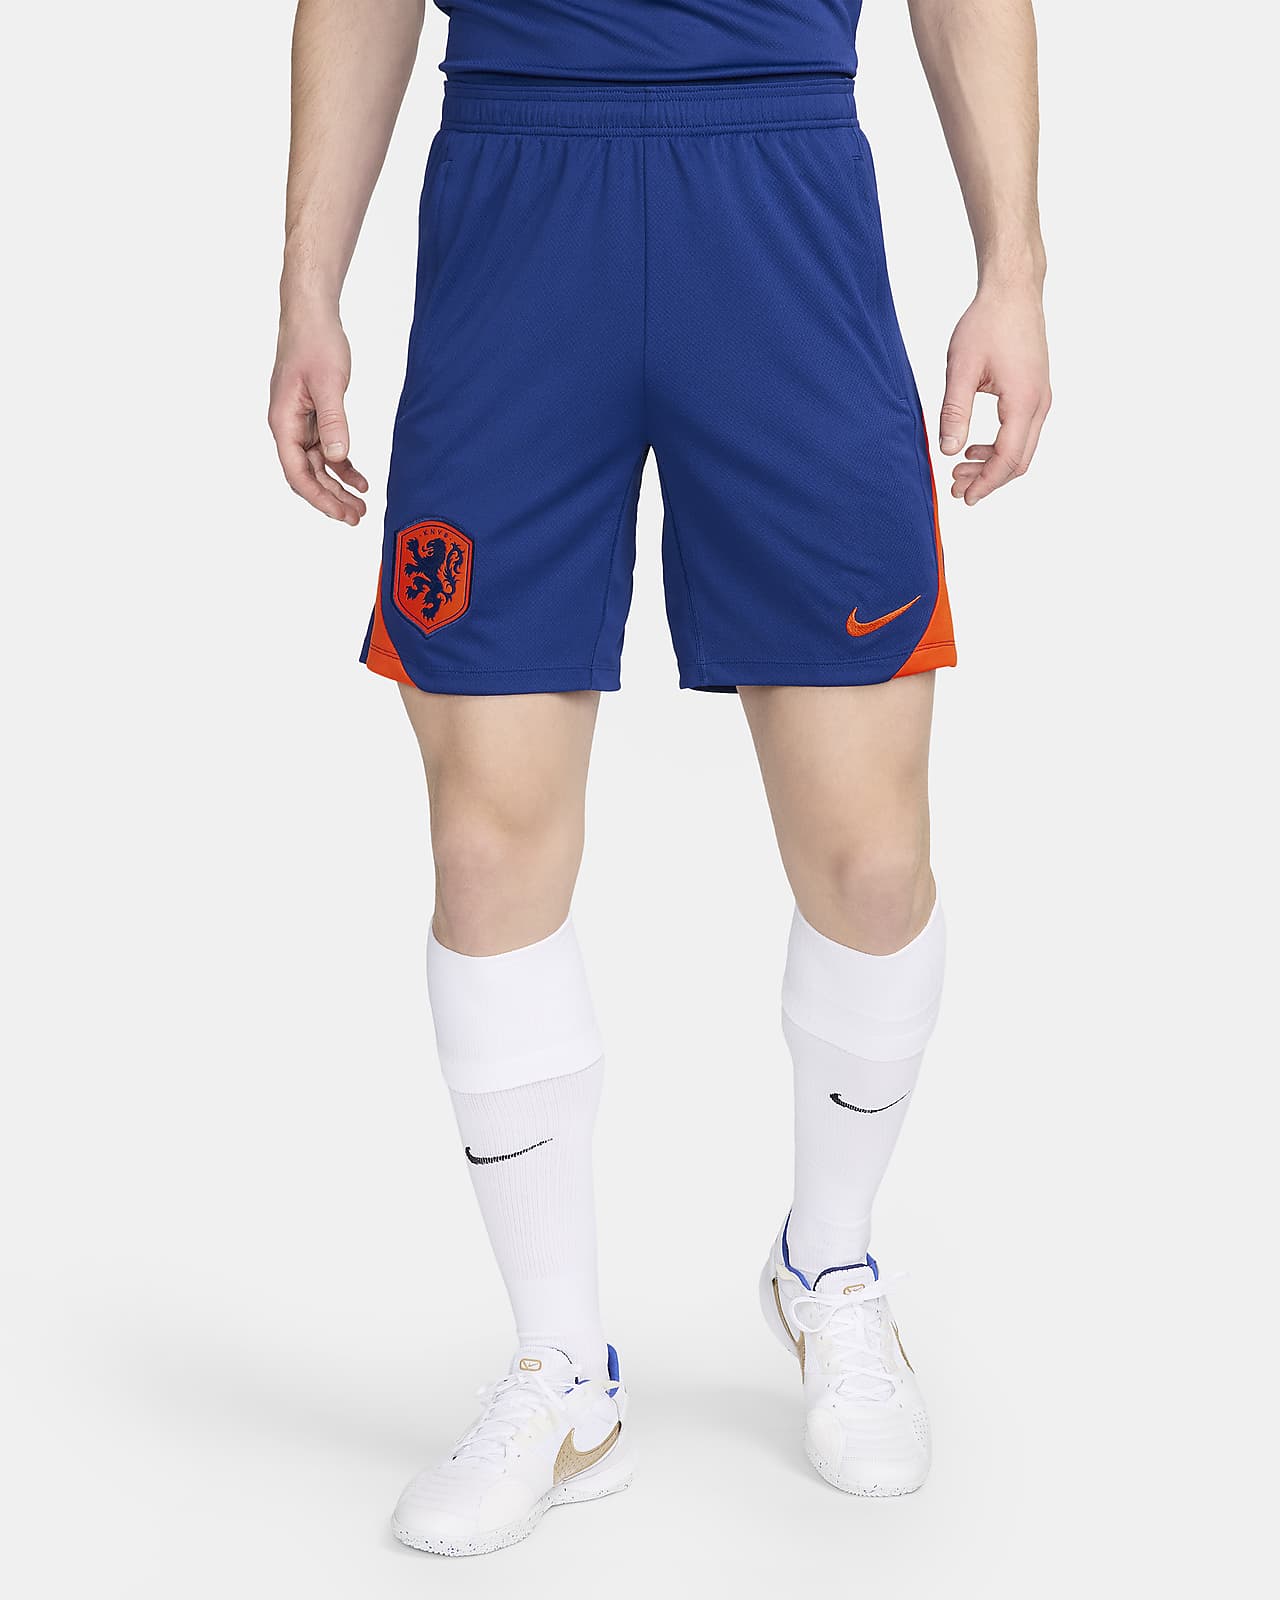 Nederland Strike Nike Dri-FIT knit voetbalshorts voor heren